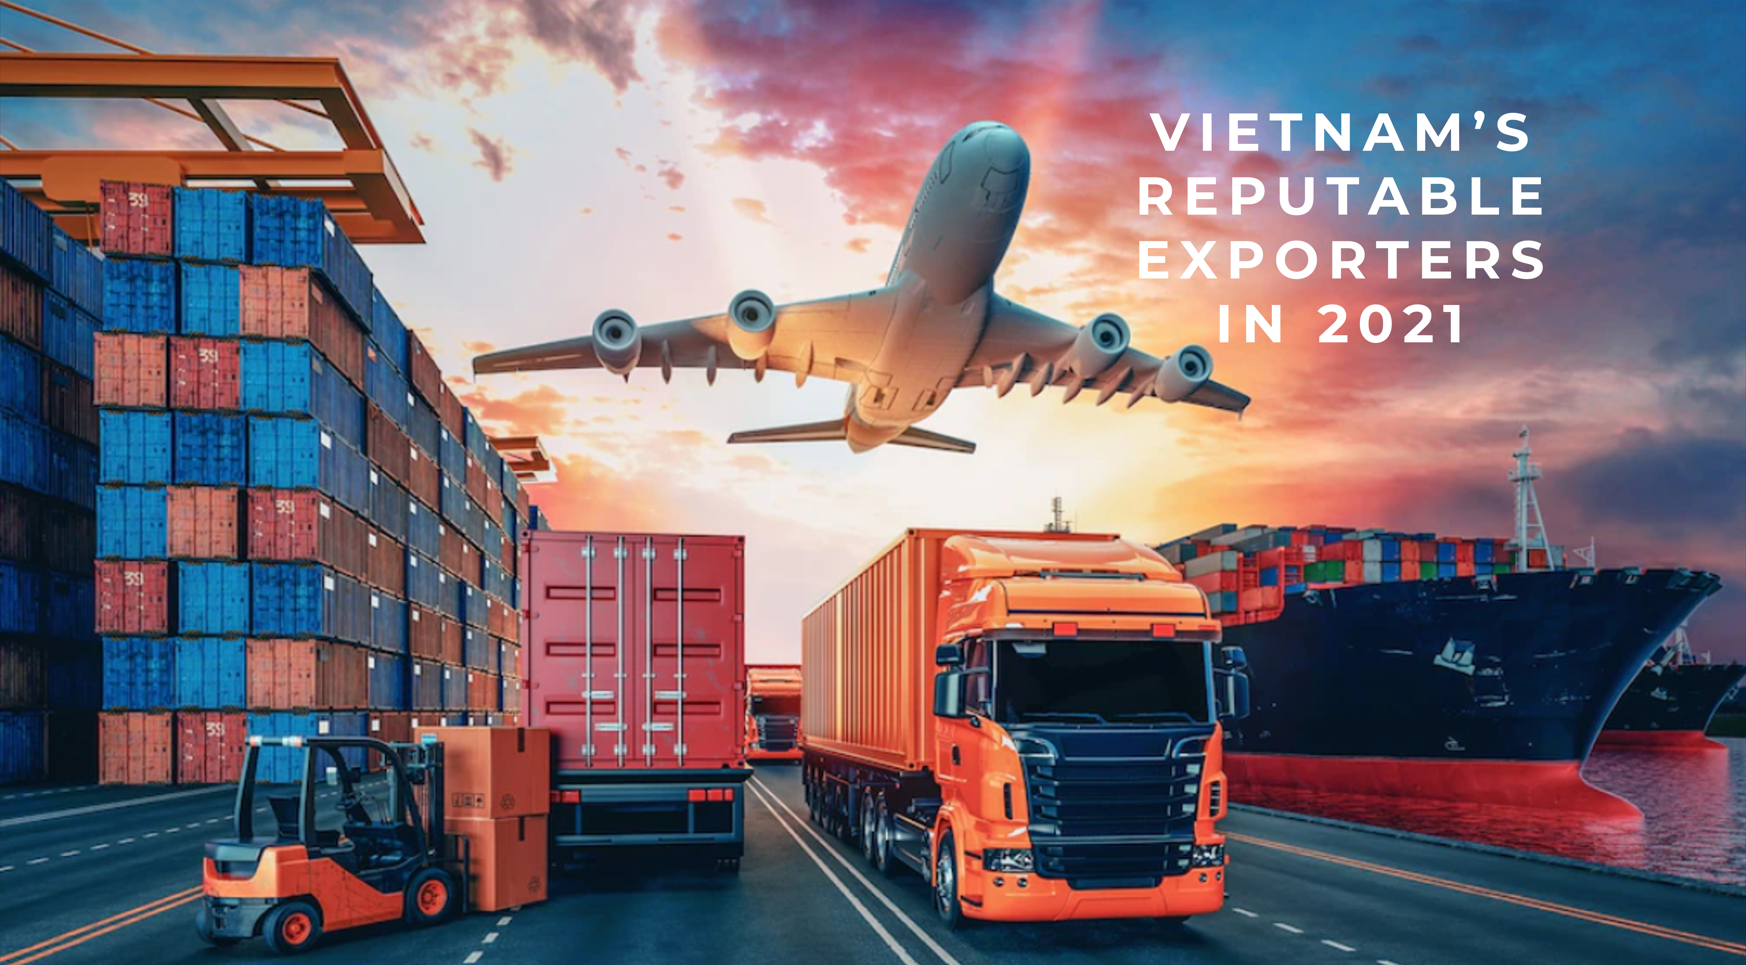 Visimex was honoured in the list of Vietnam's reputable exporters in 2021